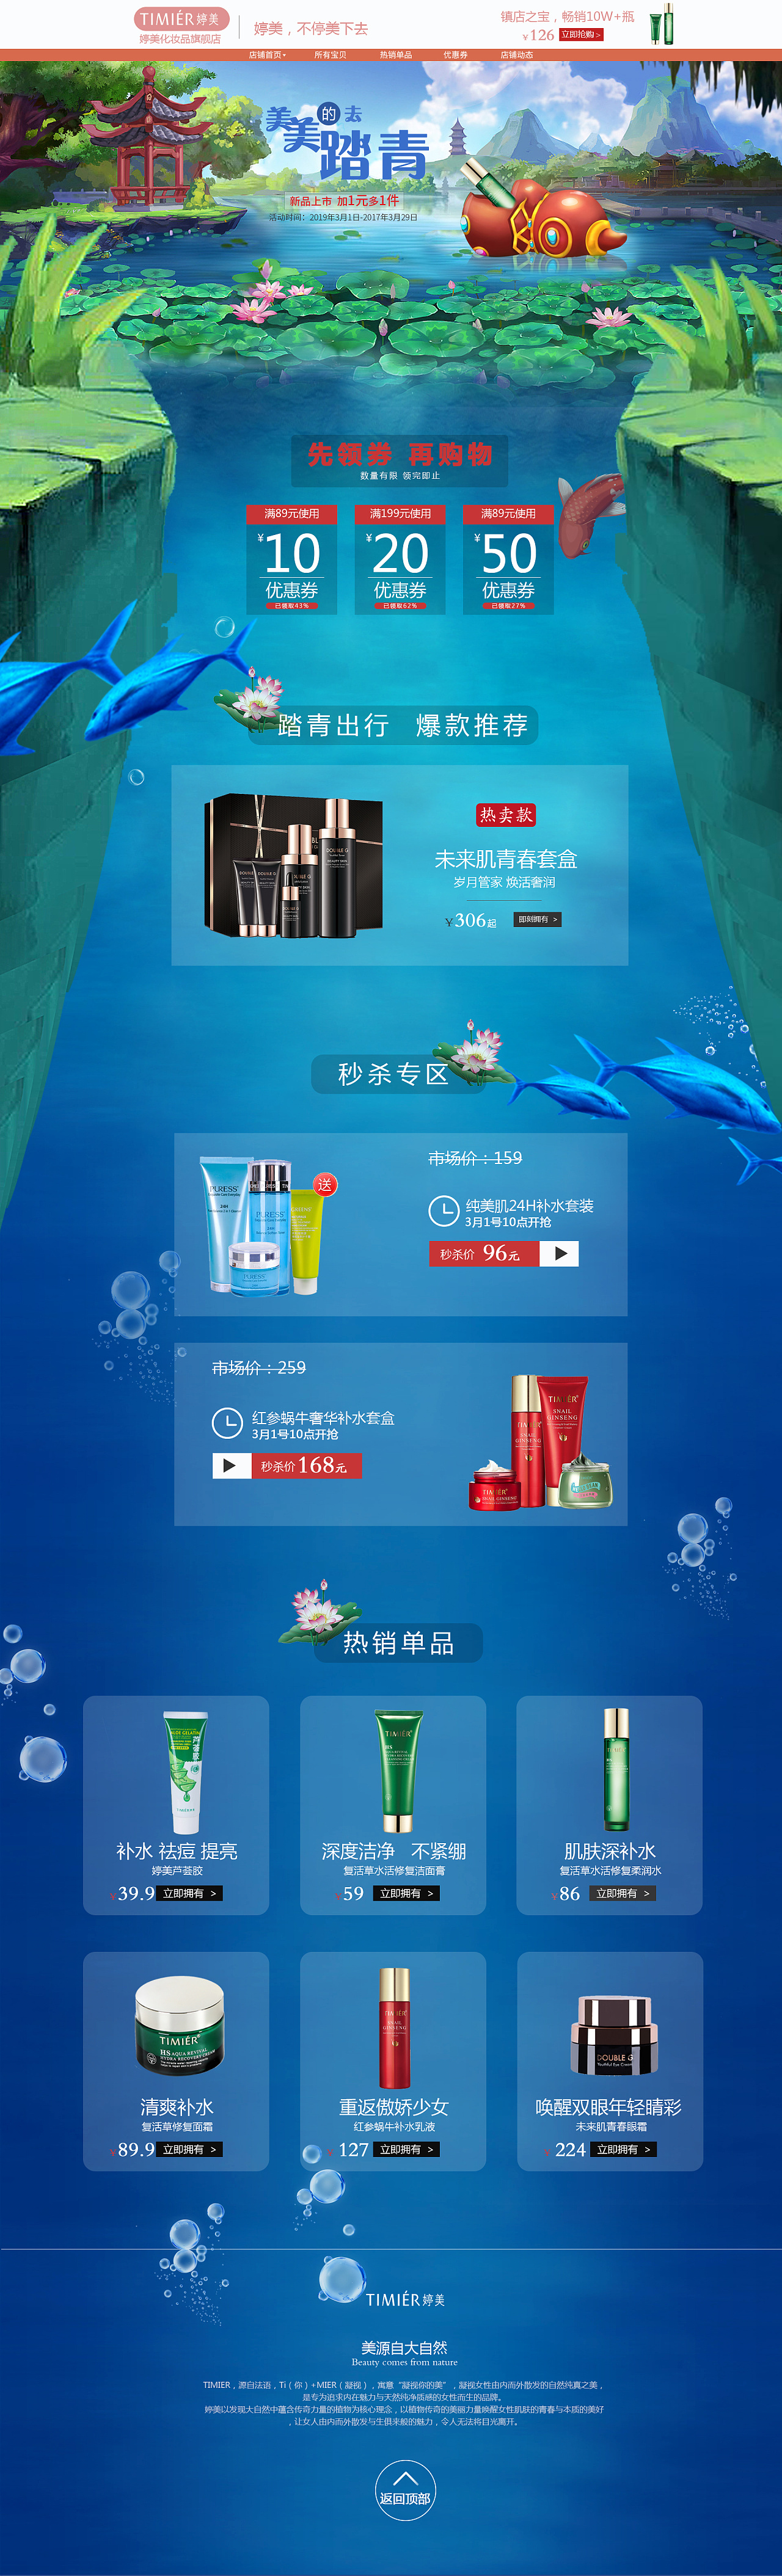 www.taobao.xom-淘宝网购：海量好货，便捷快速，